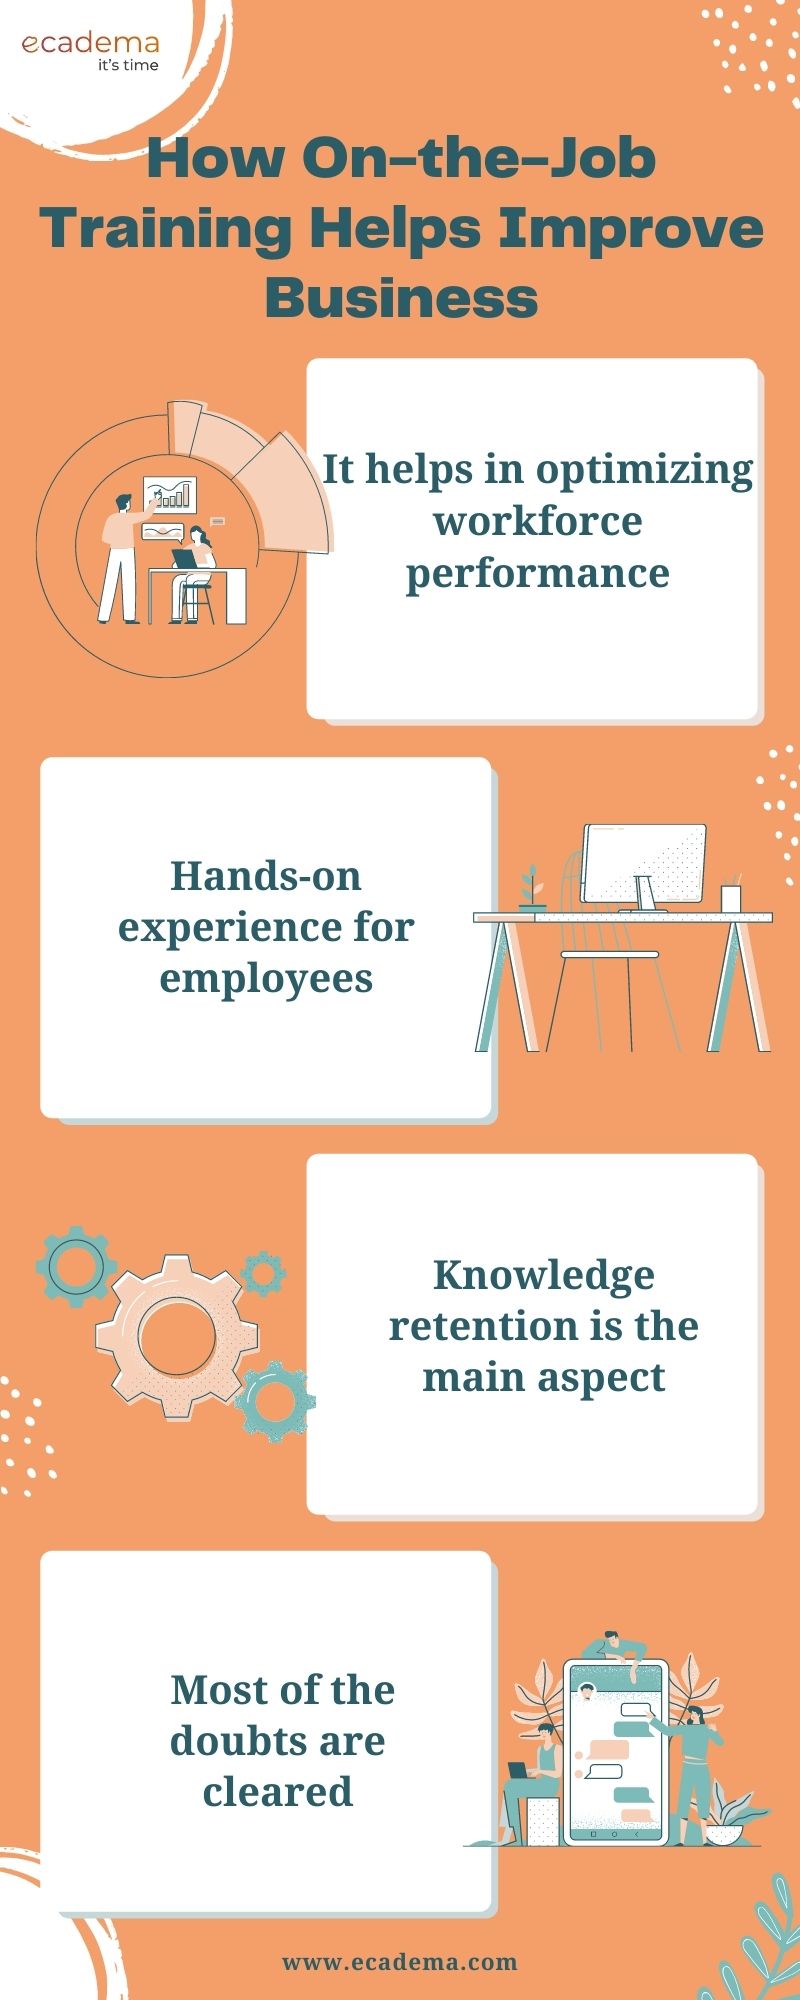 How On-the-Job Training Helps Improve Business.jpg  by ecadema